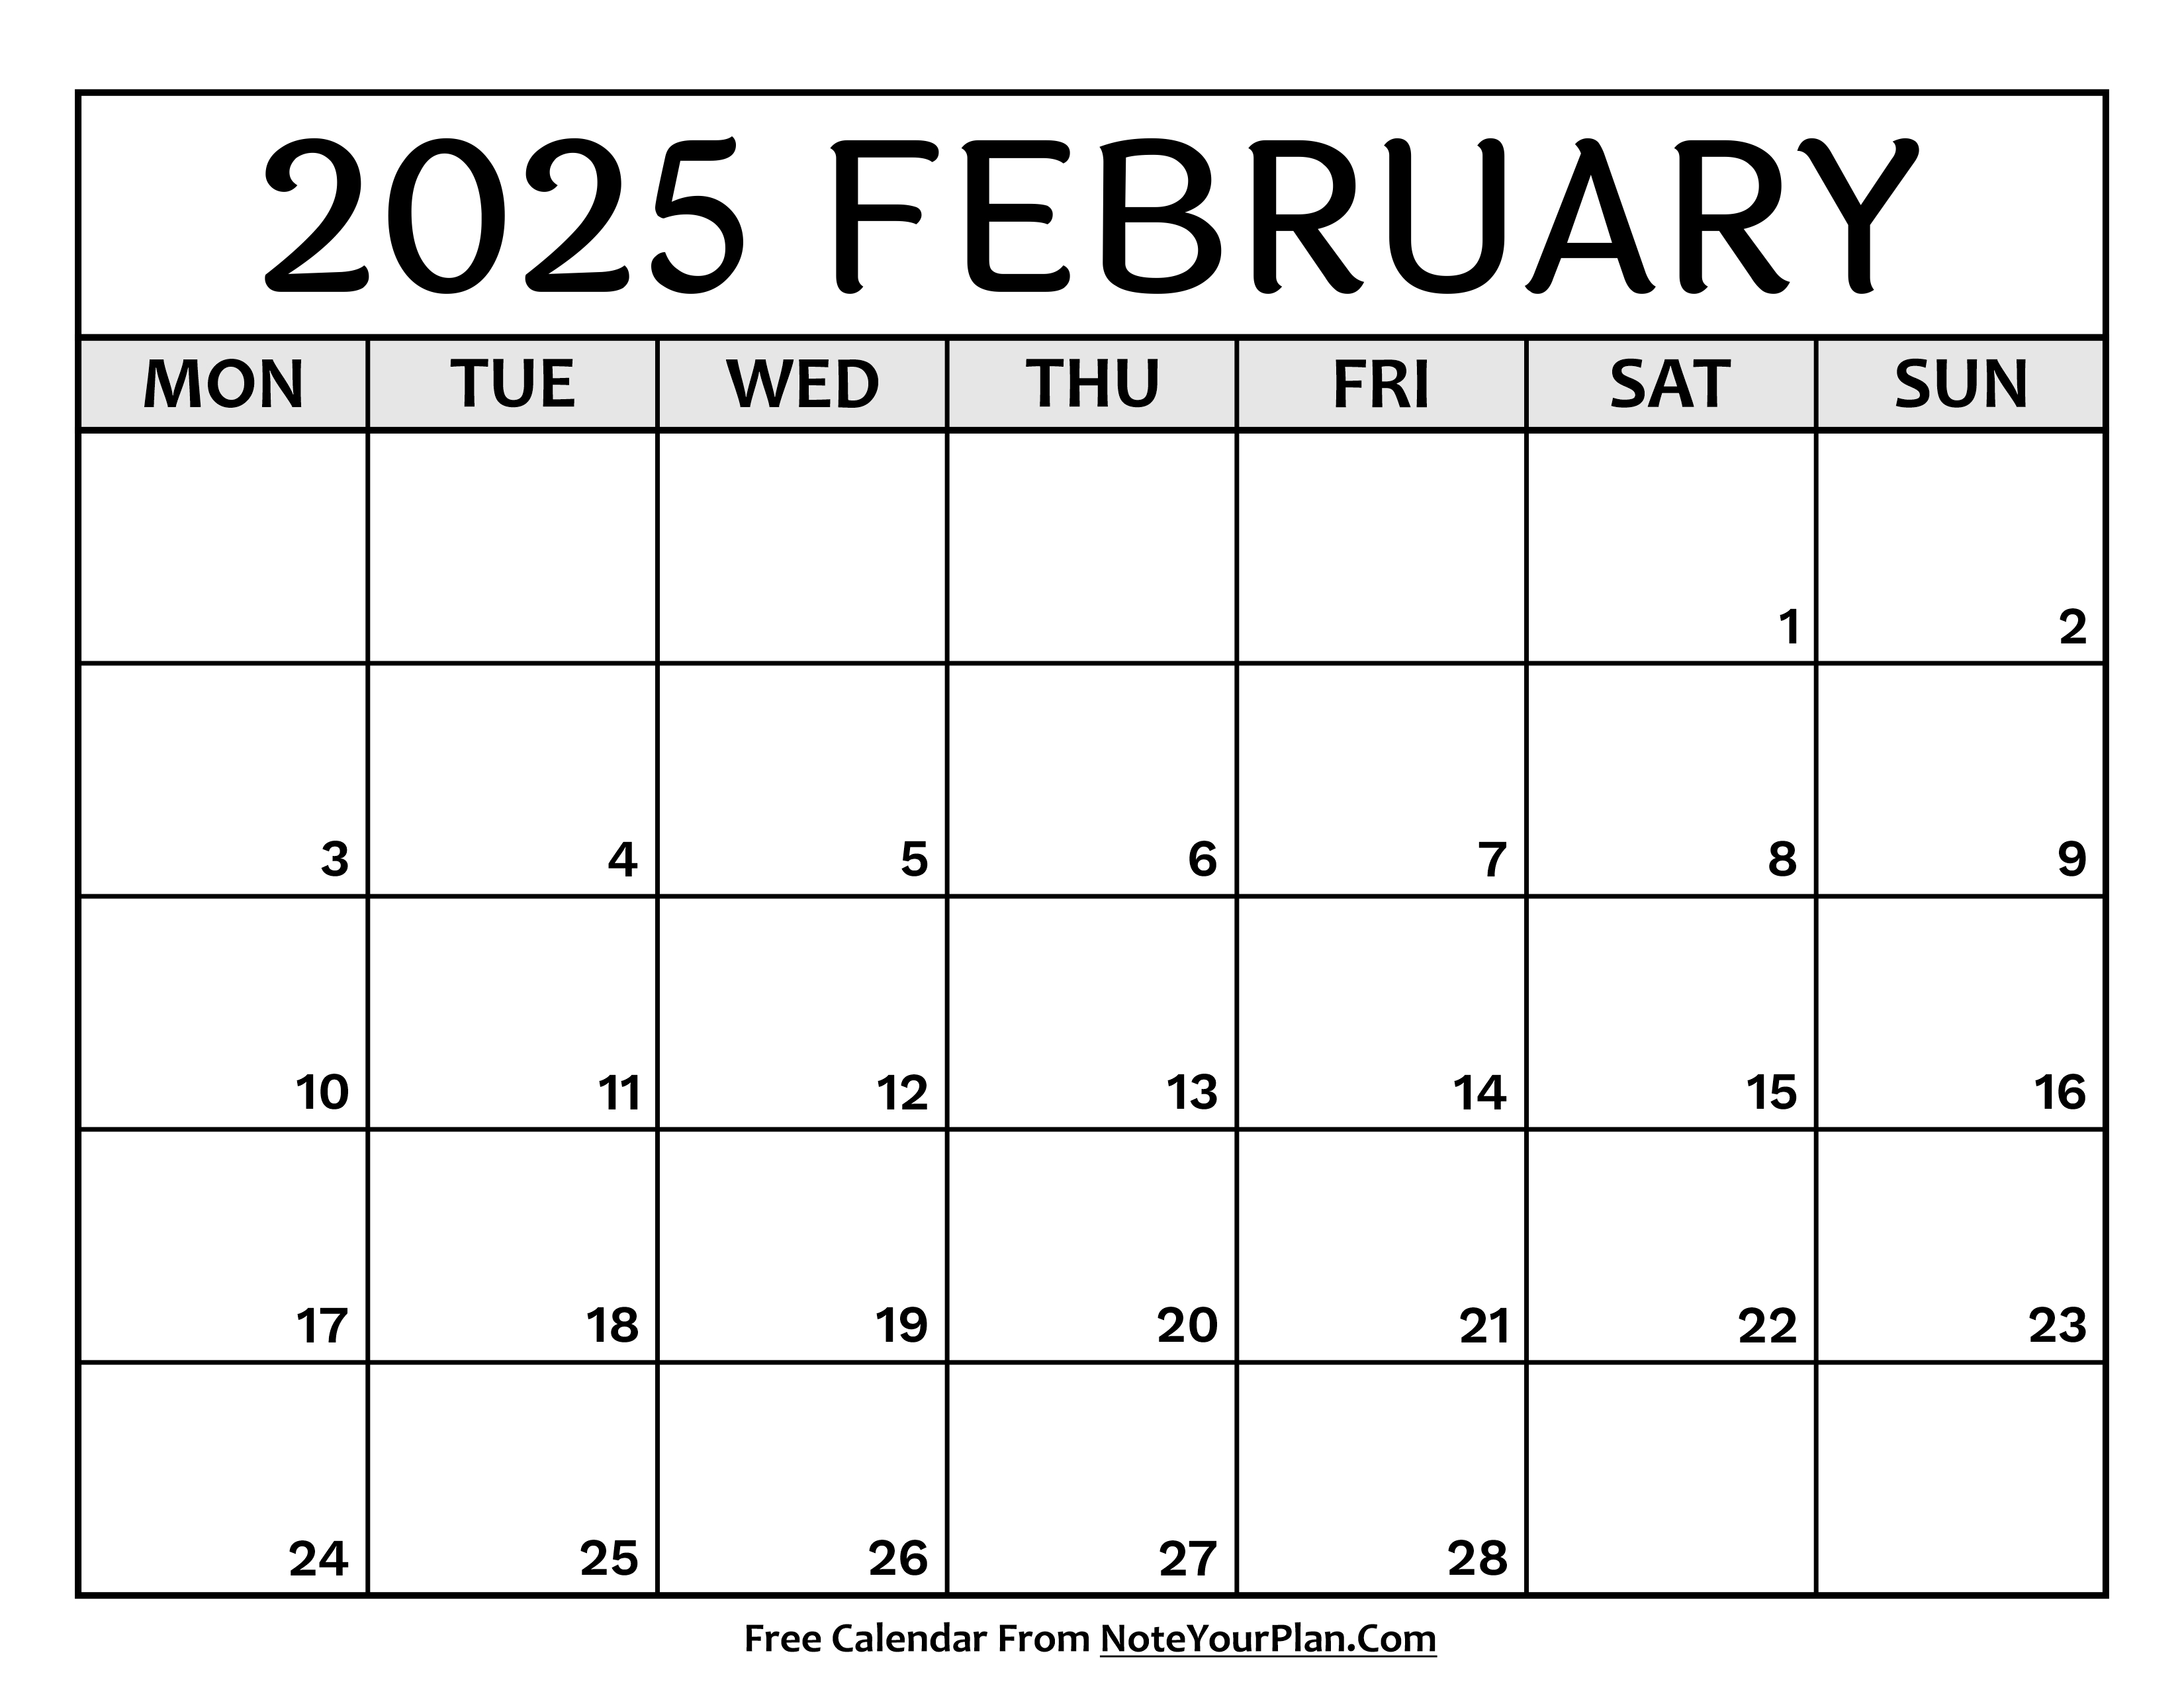 Free February Calendar 2025